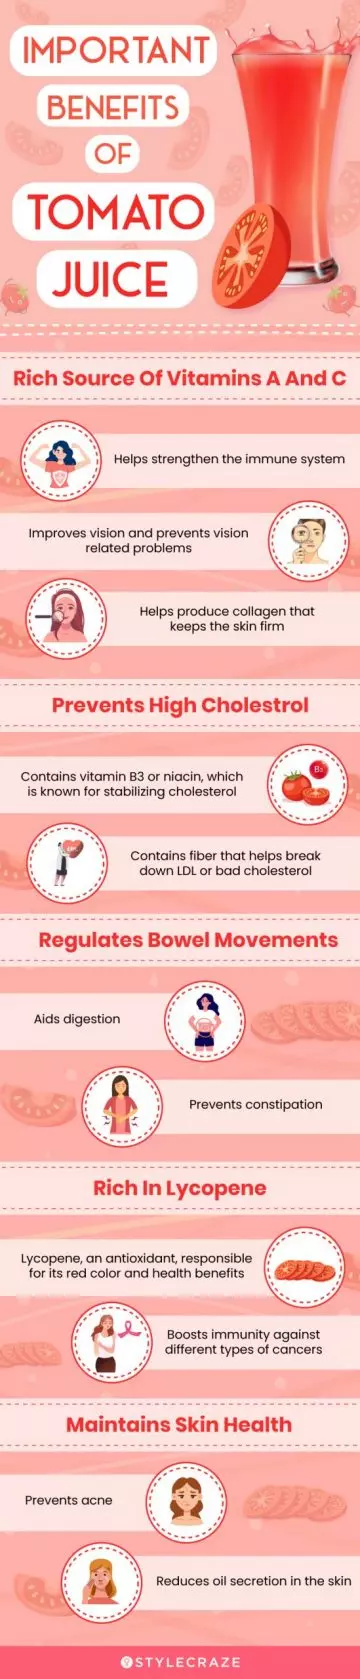 important benefits of tomato juice (infographic)